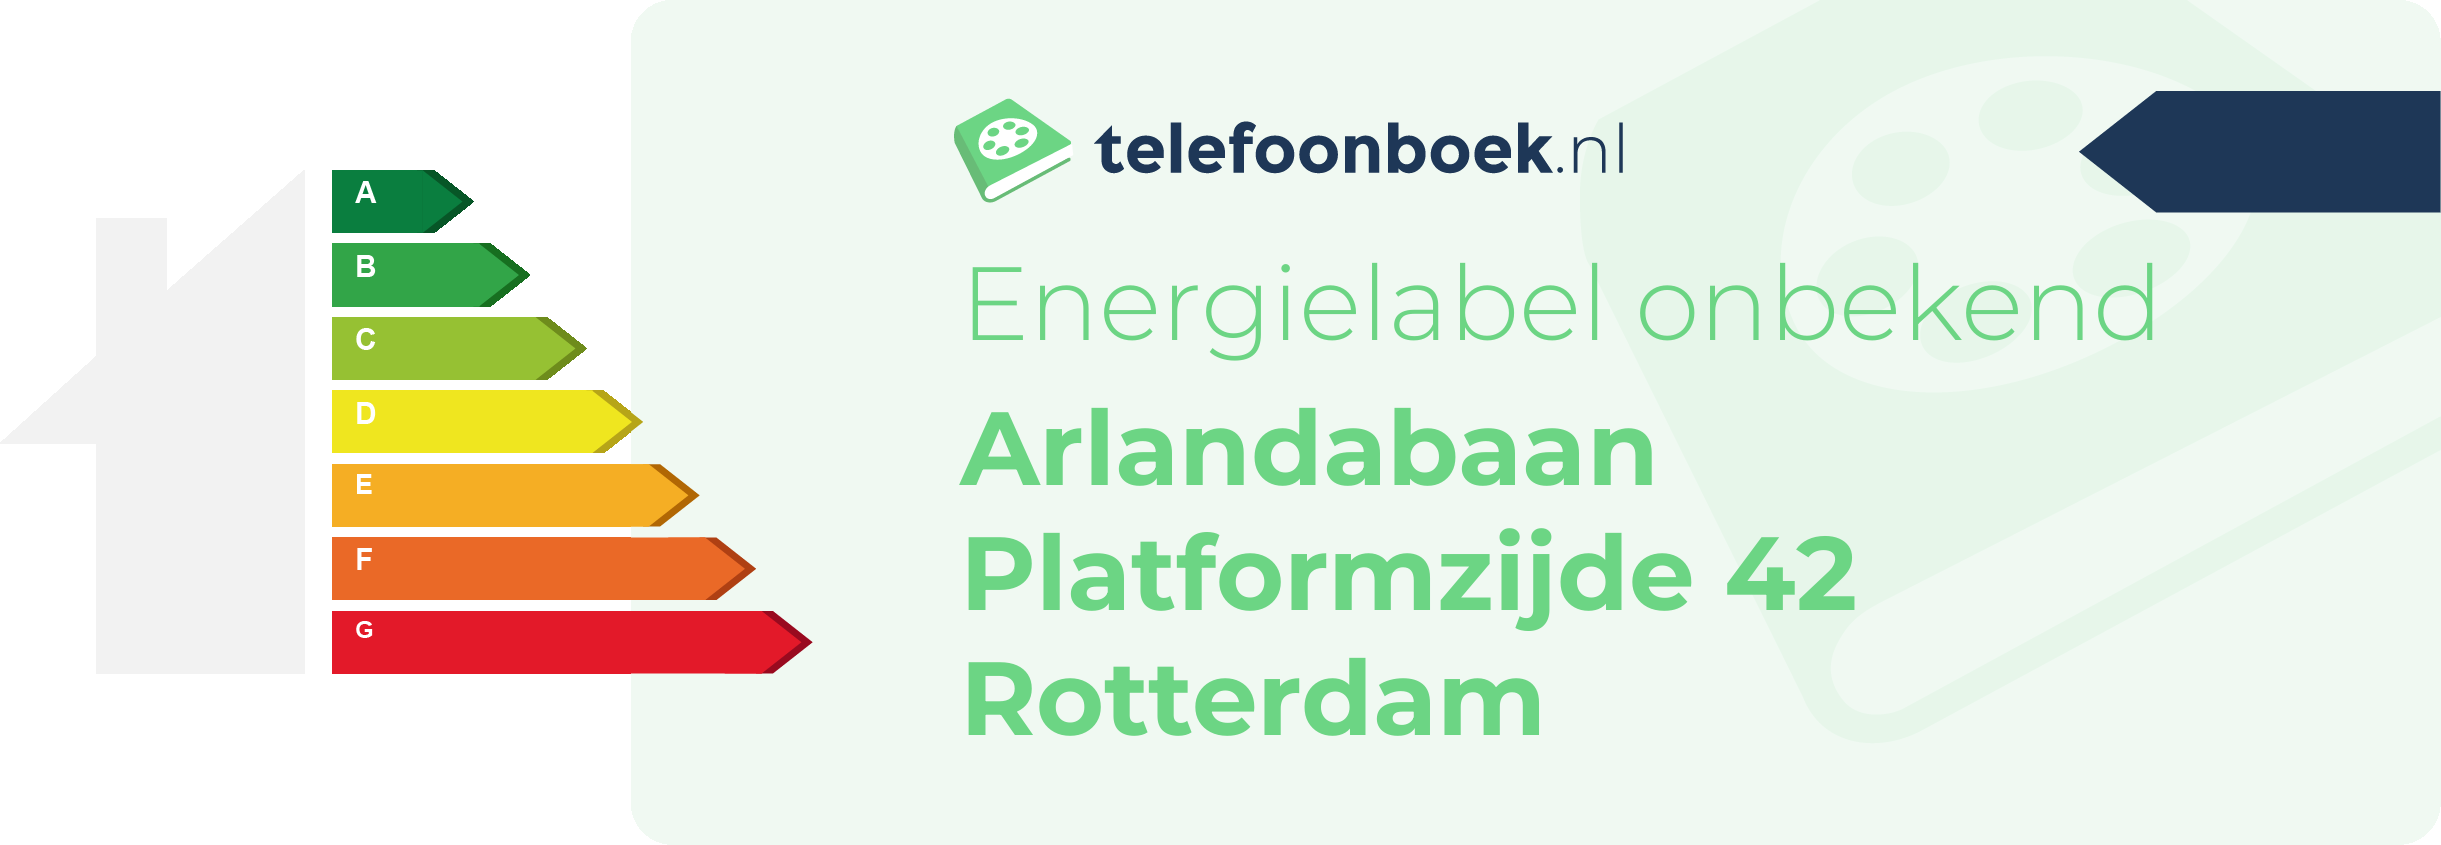 Energielabel Arlandabaan Platformzijde 42 Rotterdam